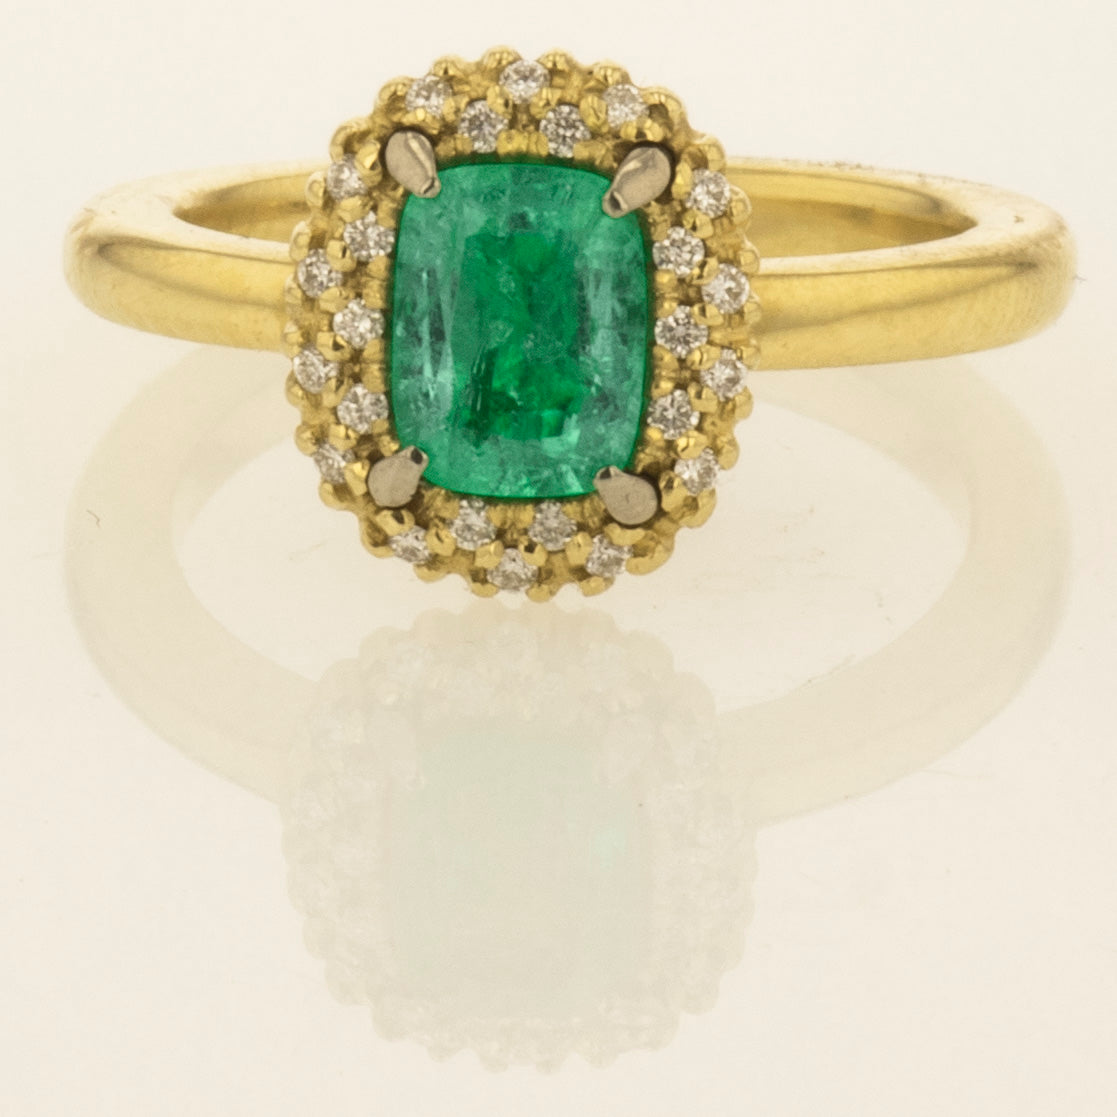 Emerald engagement ring